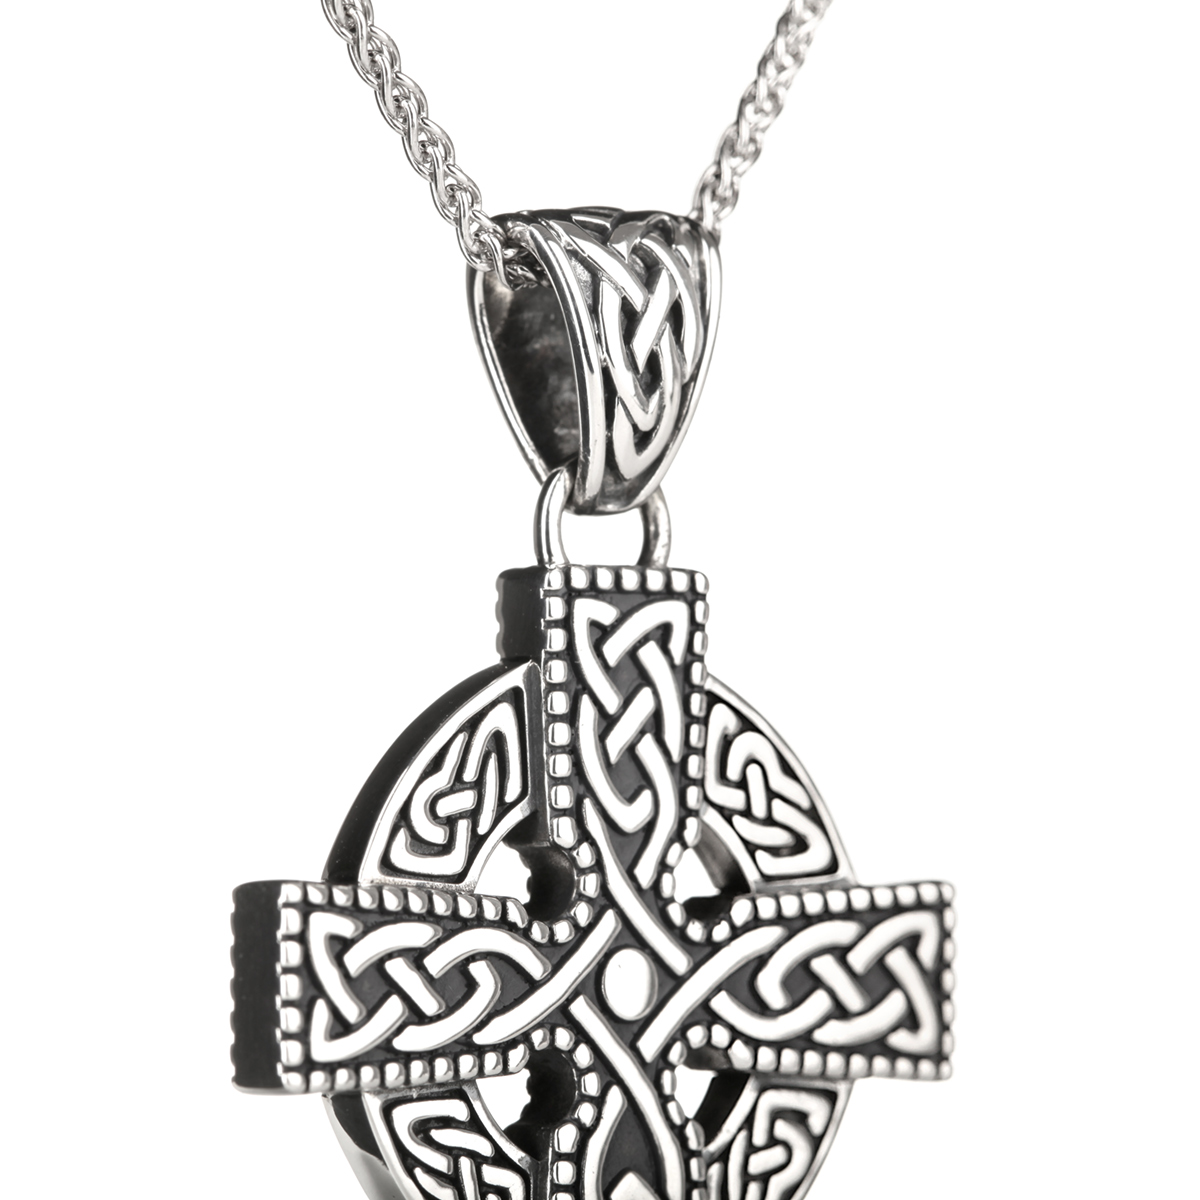 Great Celtic Cross - großes keltisches Kreuz aus Sterling Silber - handgefertigt in Irland